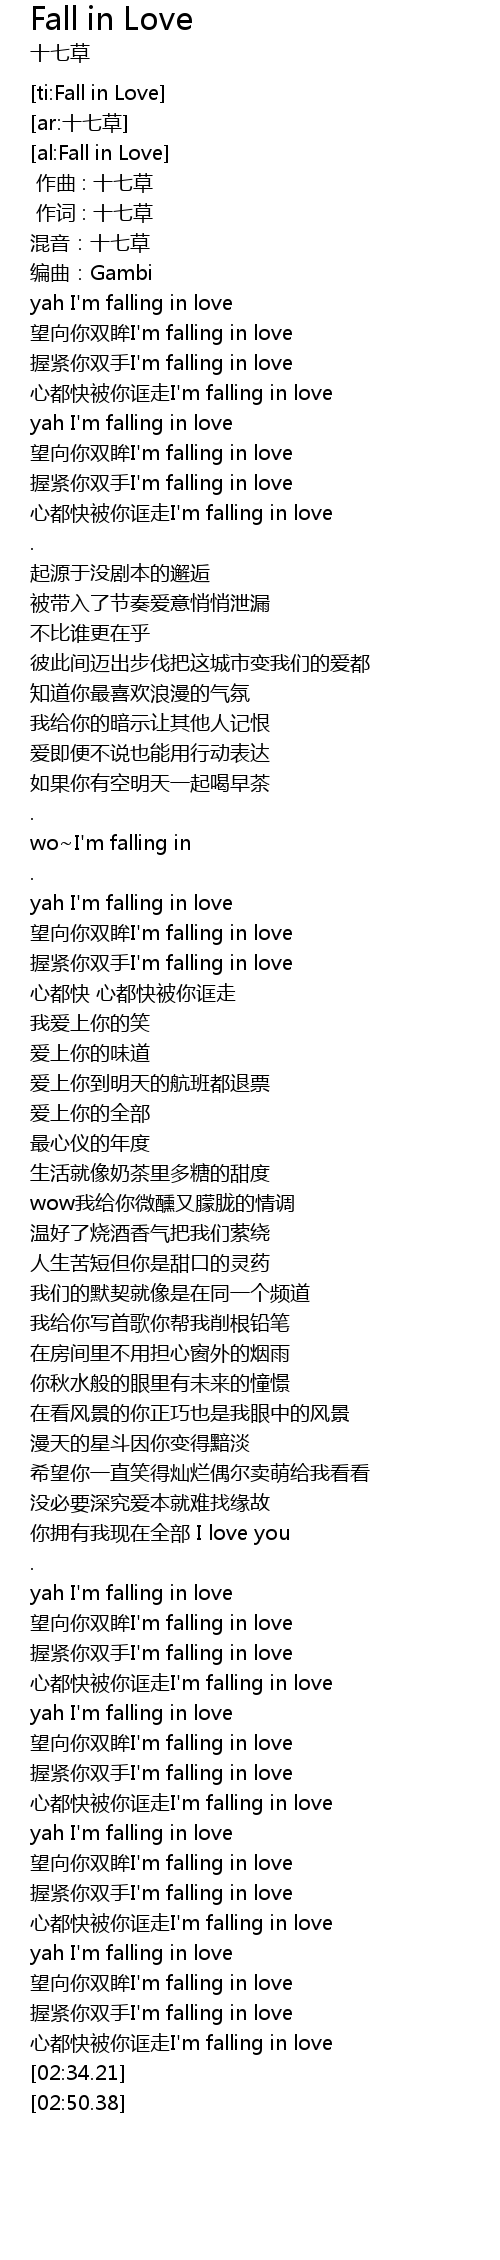 Fall in Love Lyrics